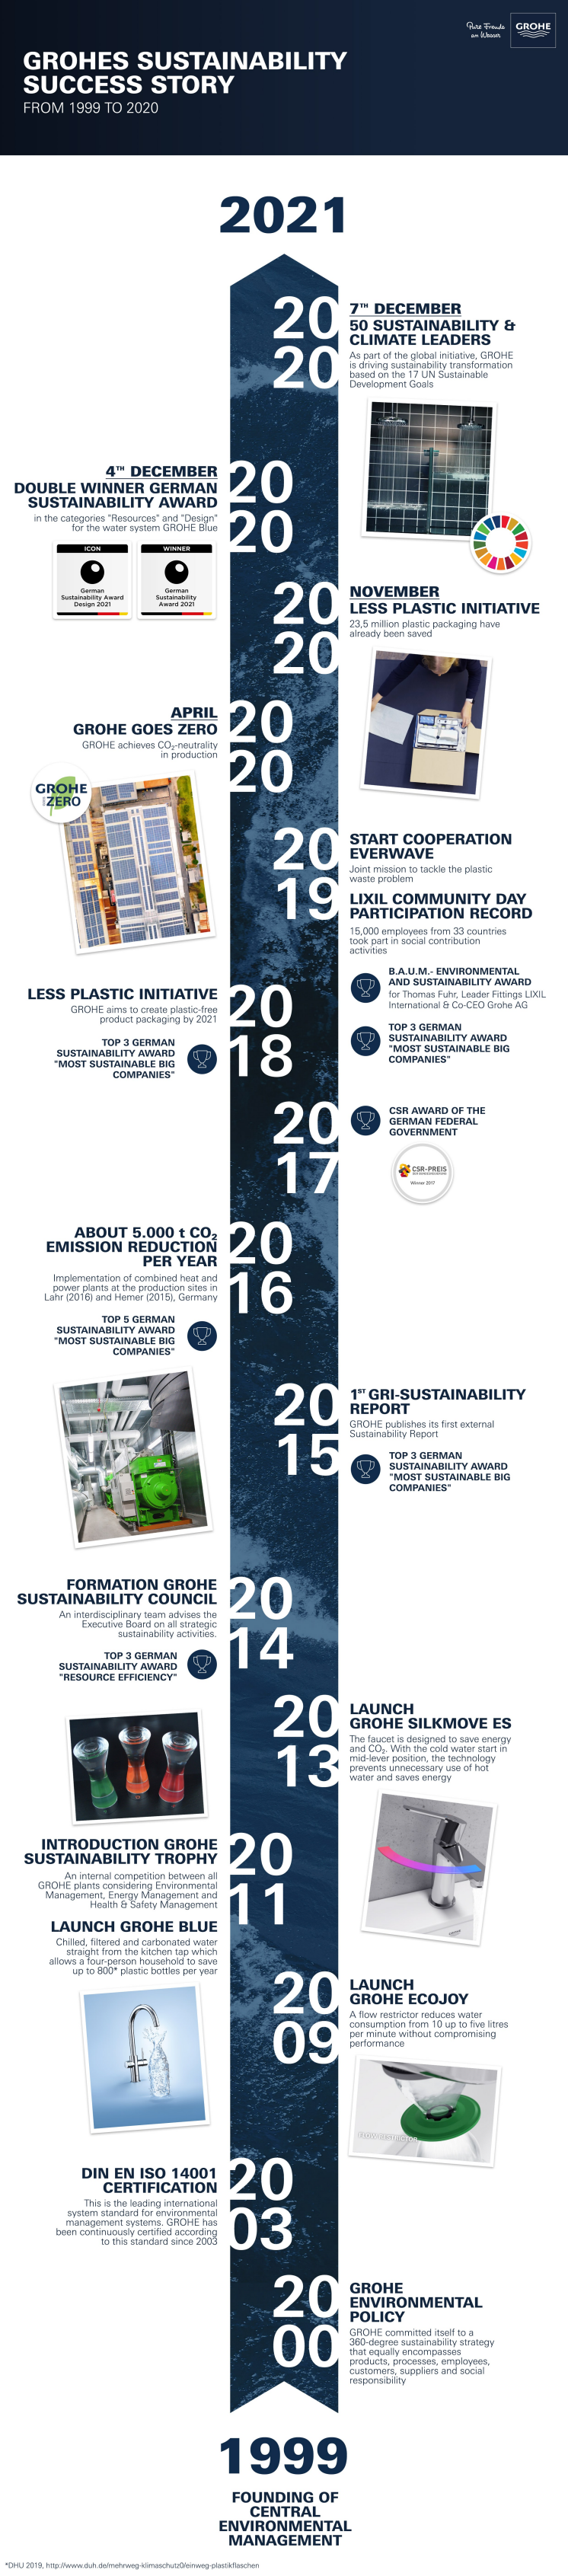 201204-Grohe_Sustainability milestones FINAL.pdf